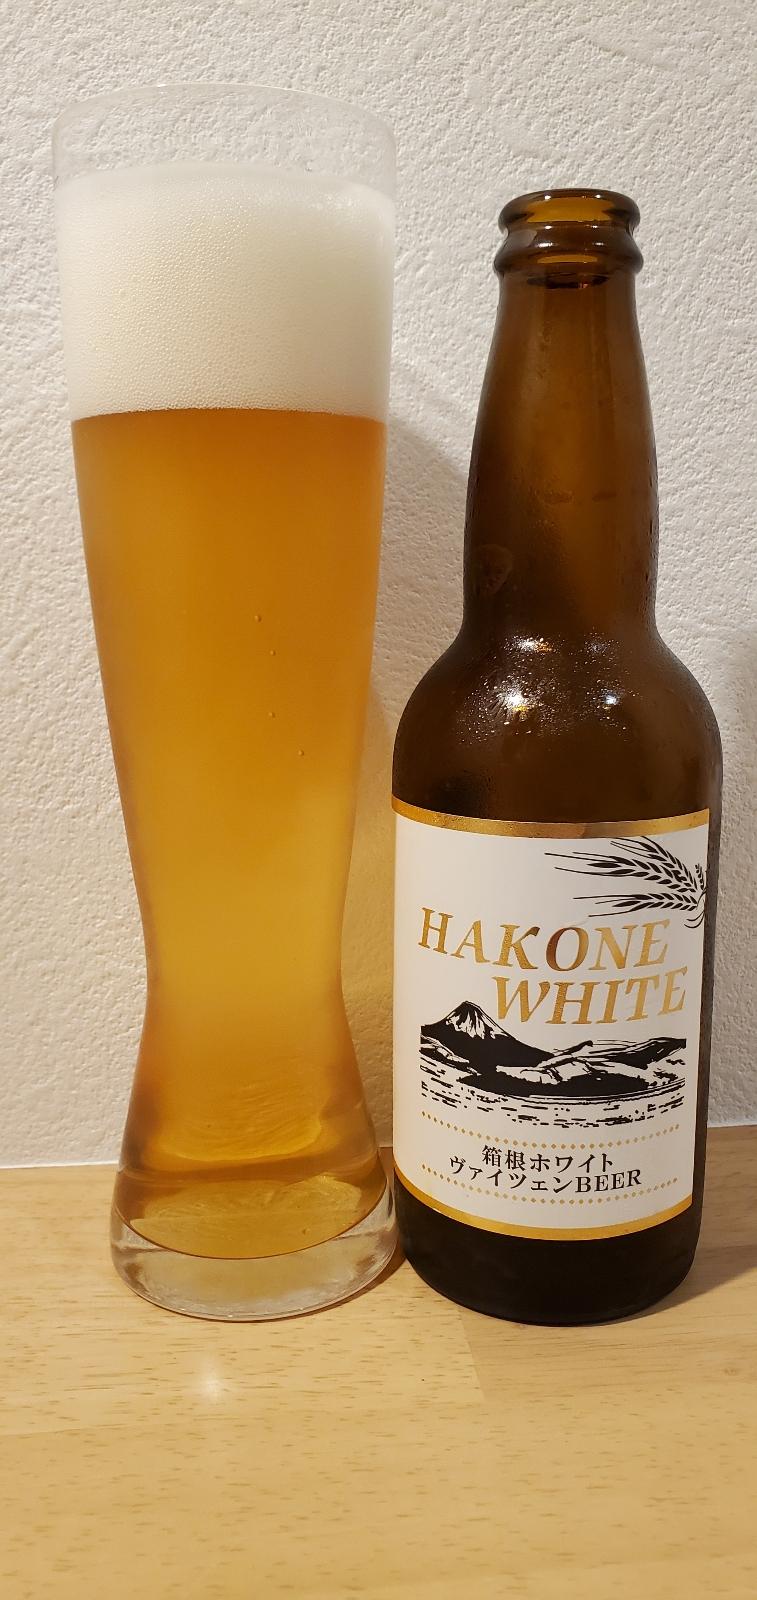 Hakone White